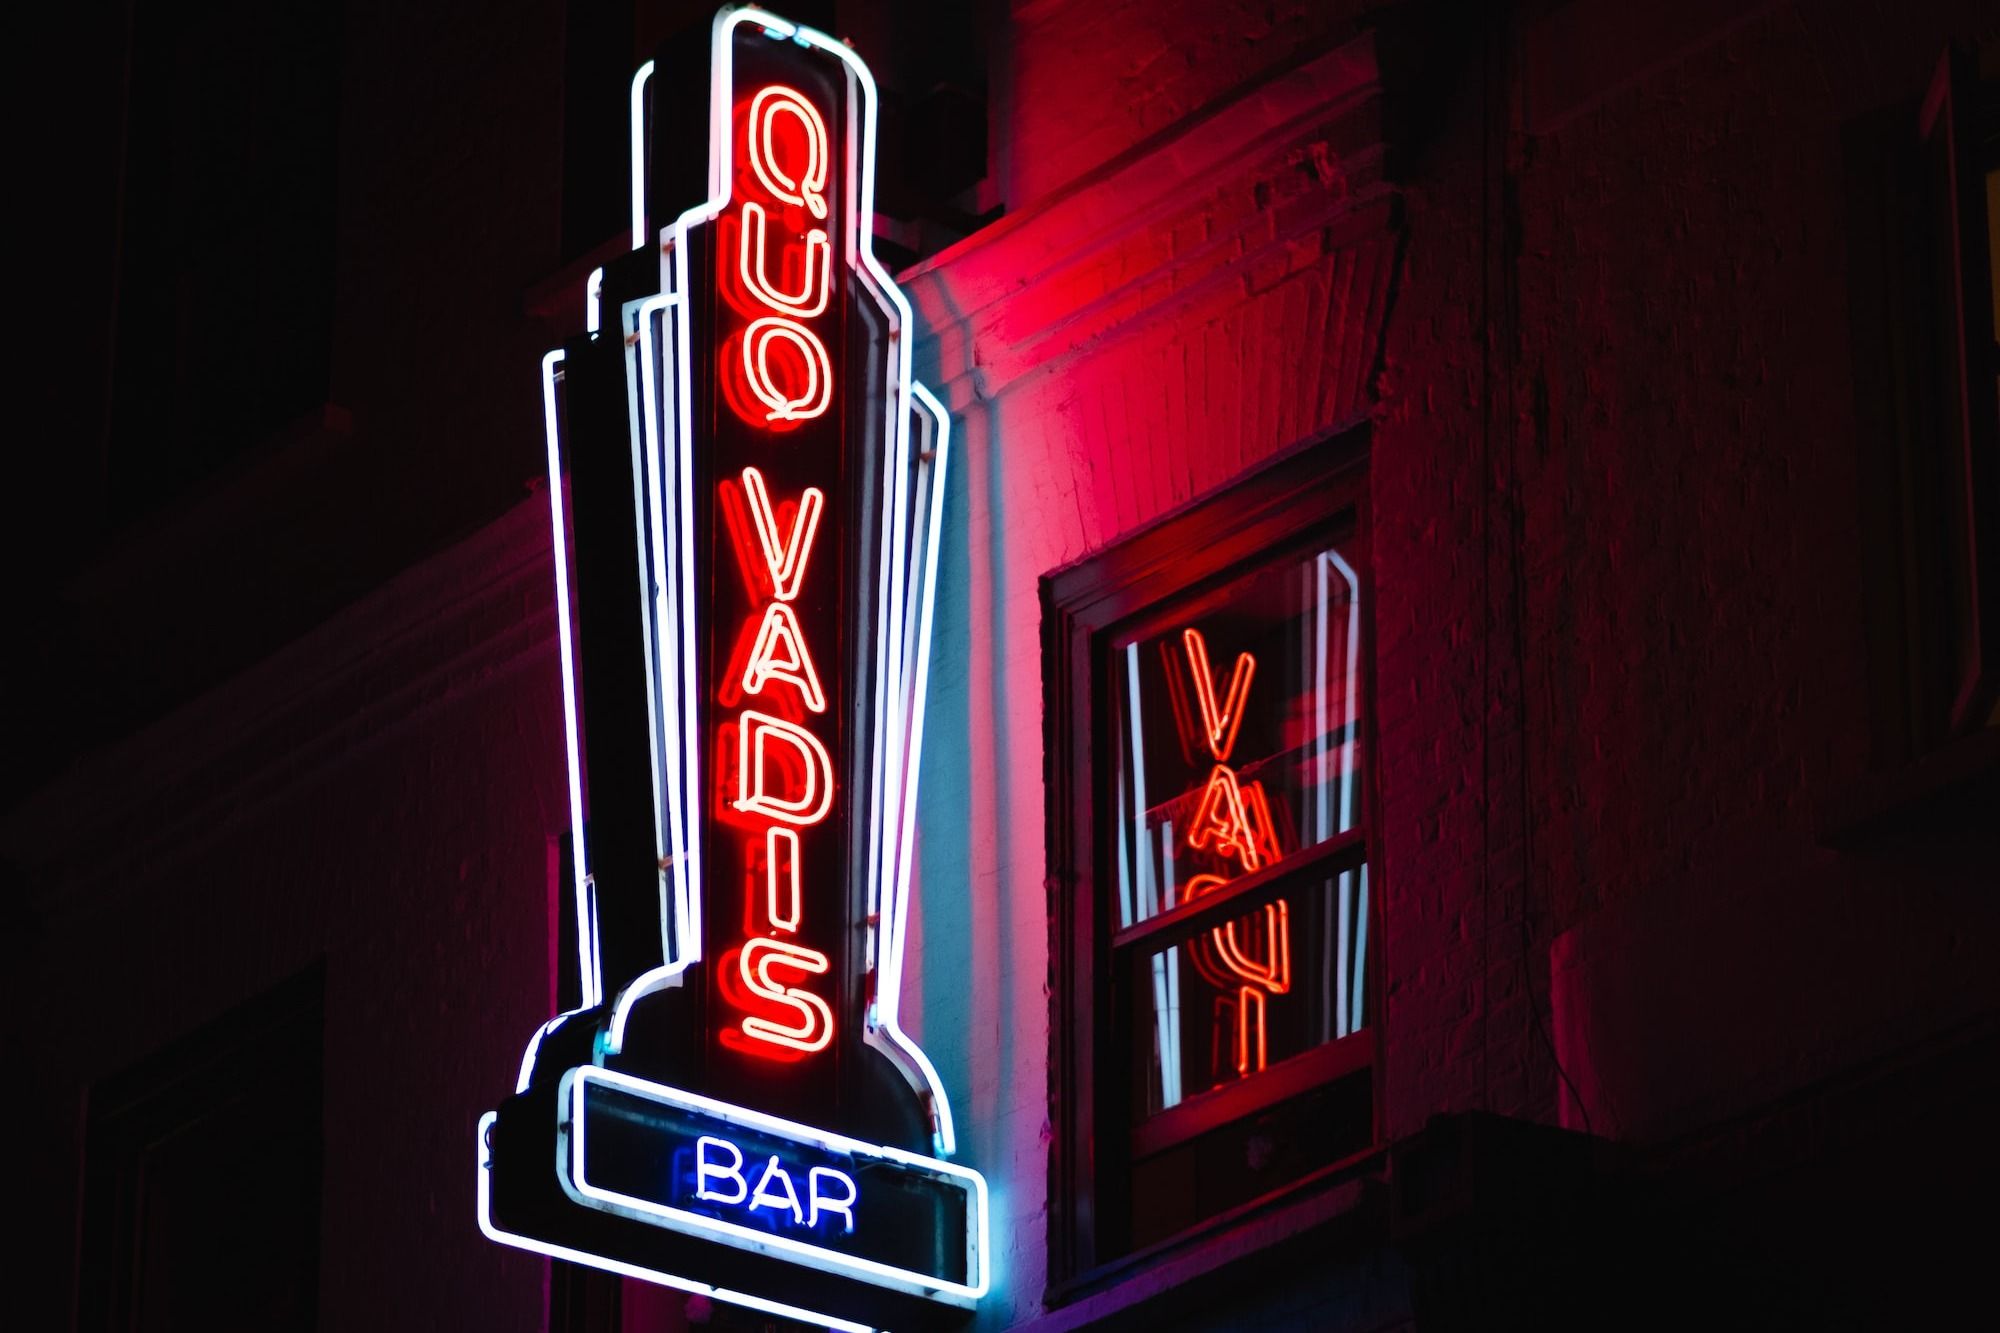 Quo Vadis bar lighted signage